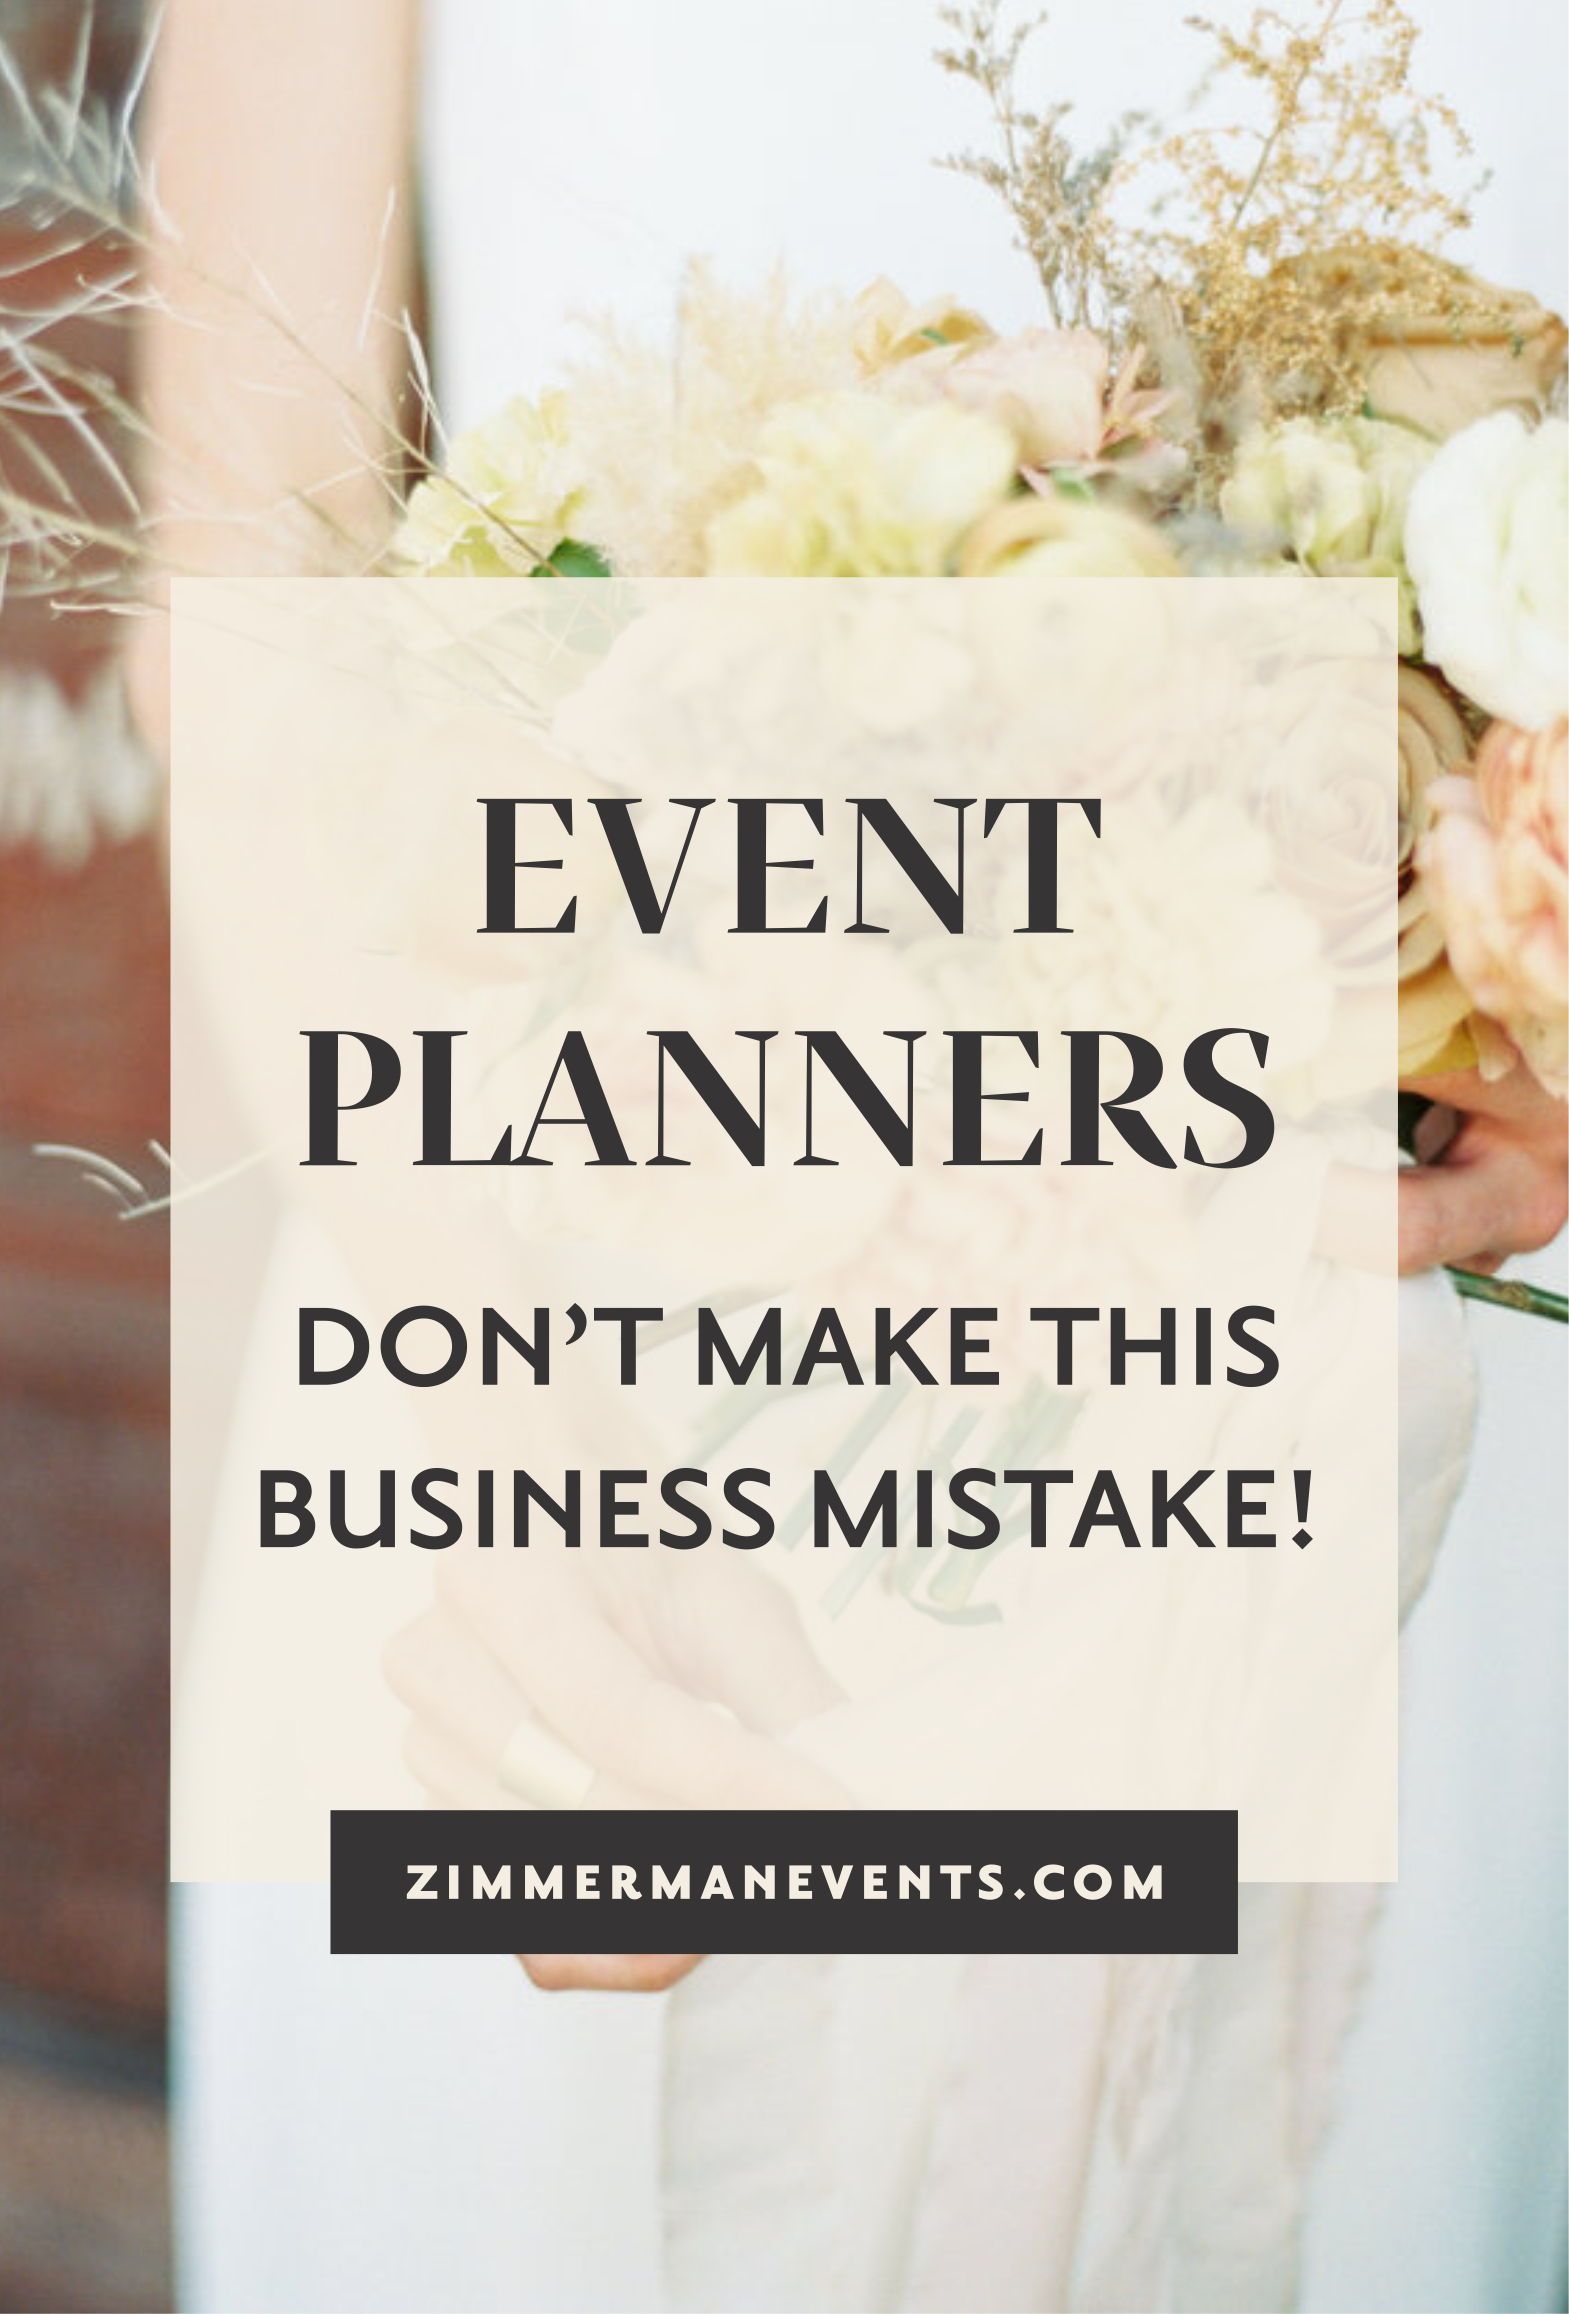 12 Event Planning Business shops ideas